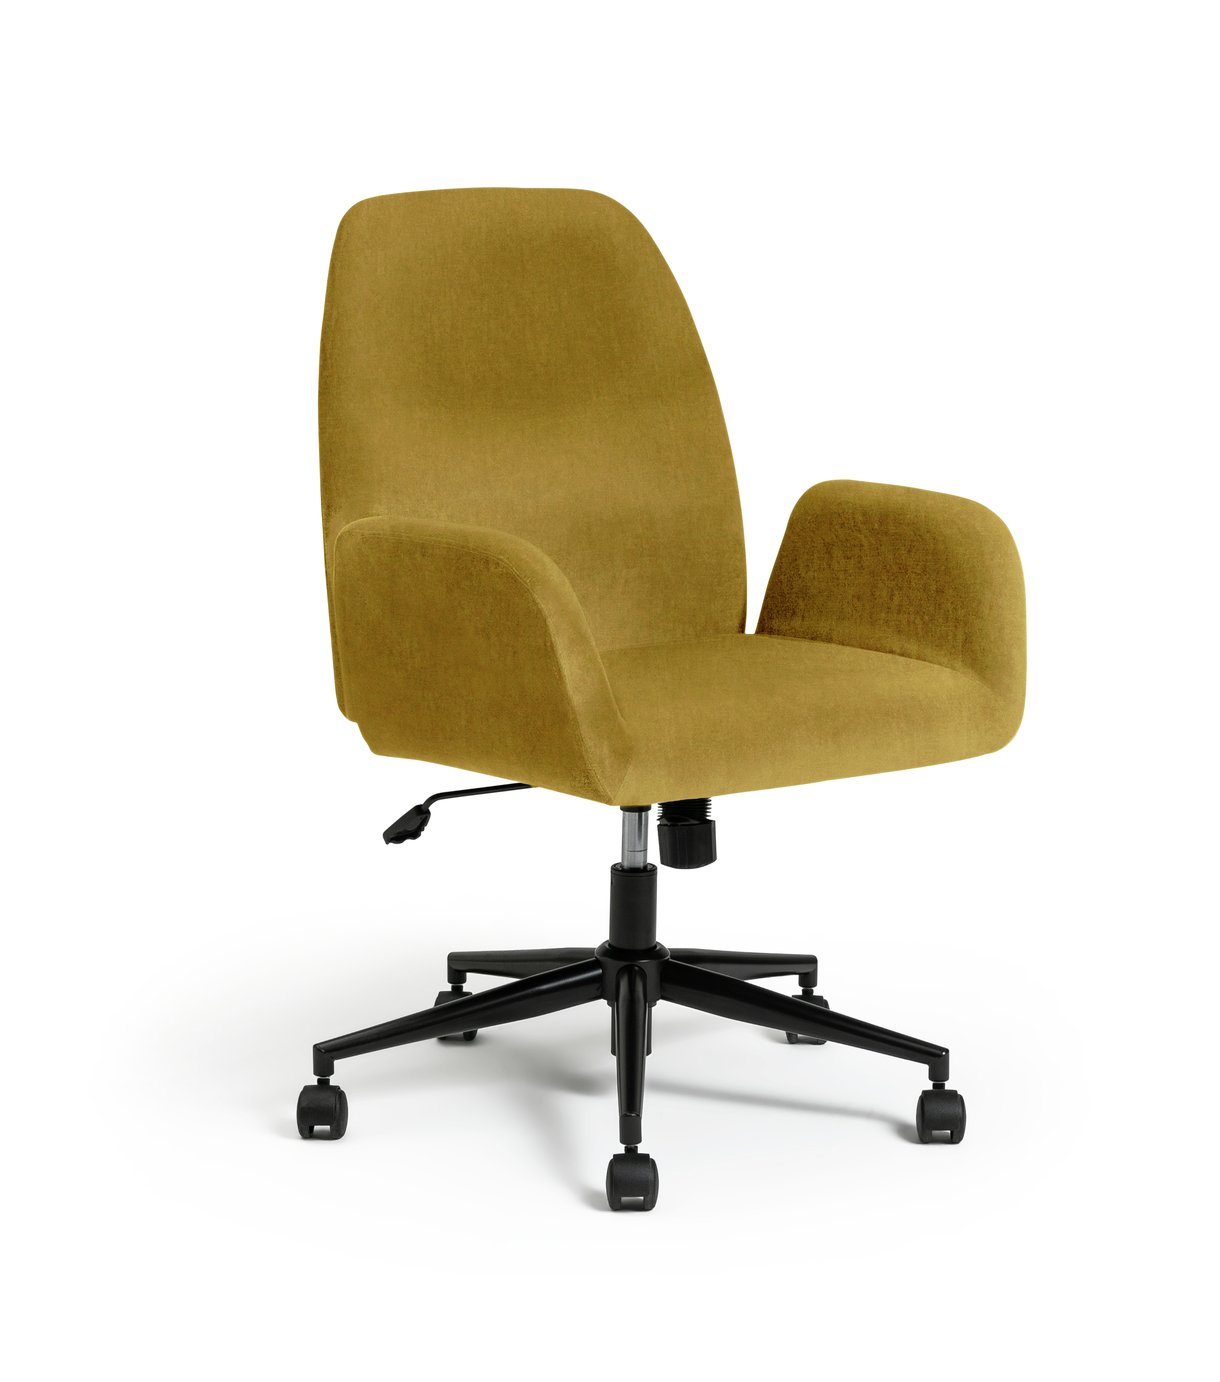 Habitat Clarice Fabric Office Chair - Mustard & Black